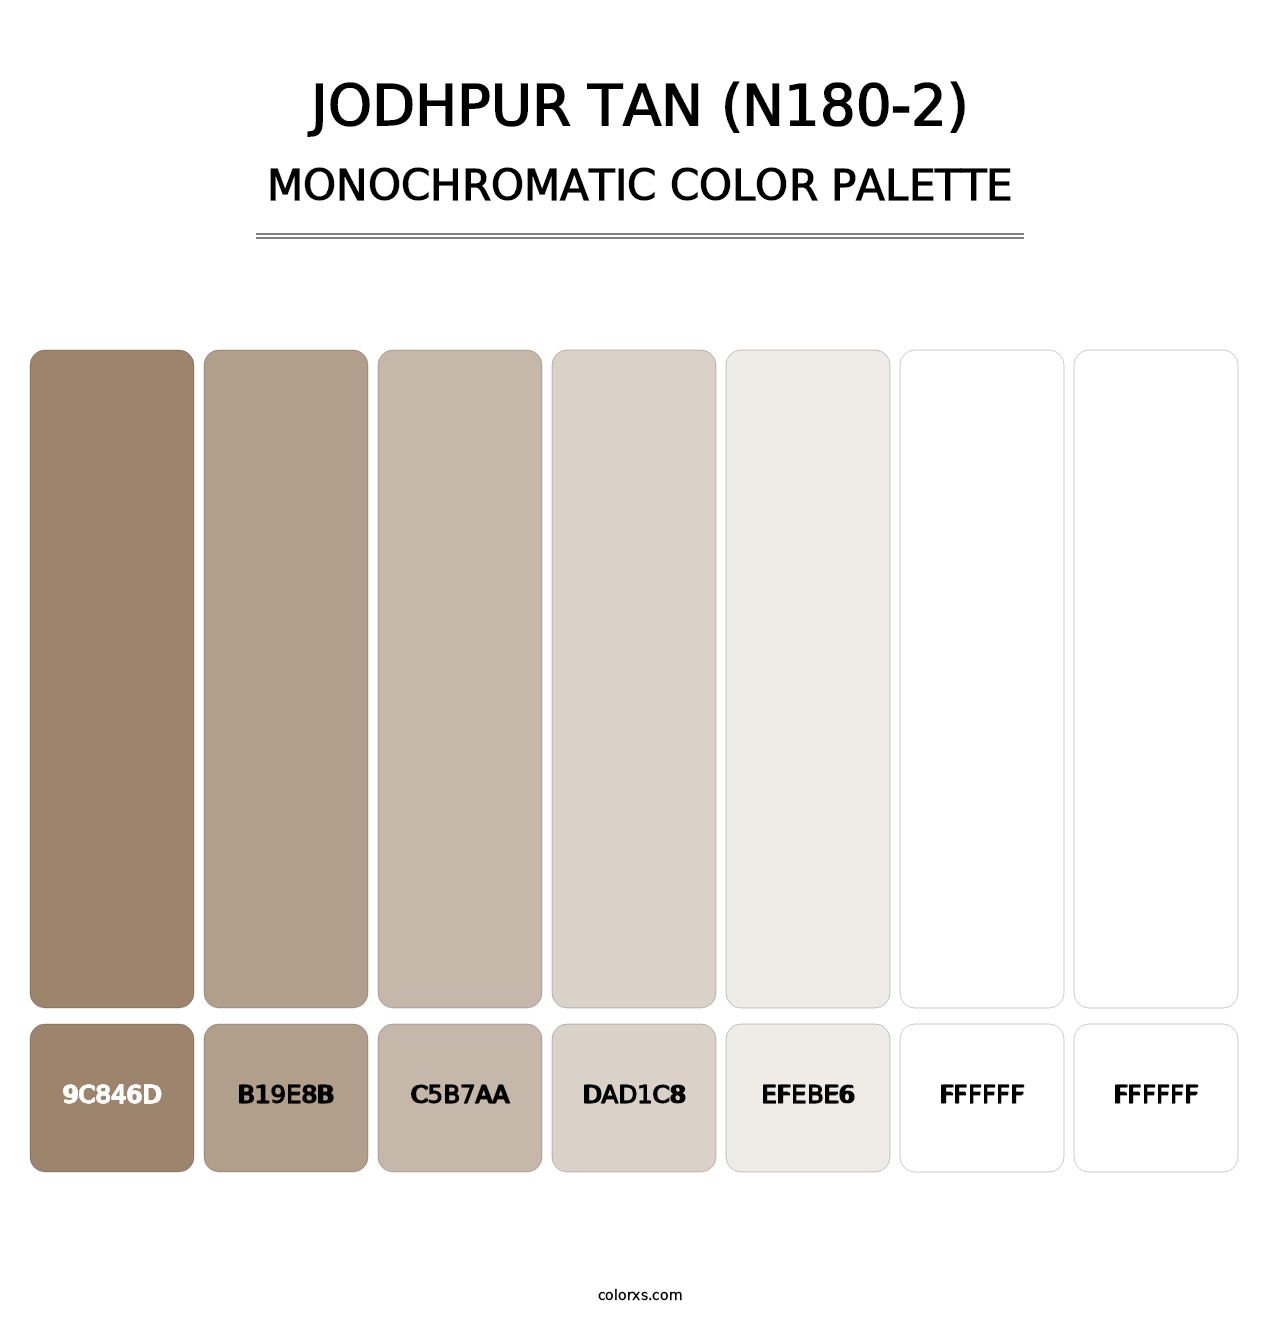 Jodhpur Tan (N180-2) - Monochromatic Color Palette